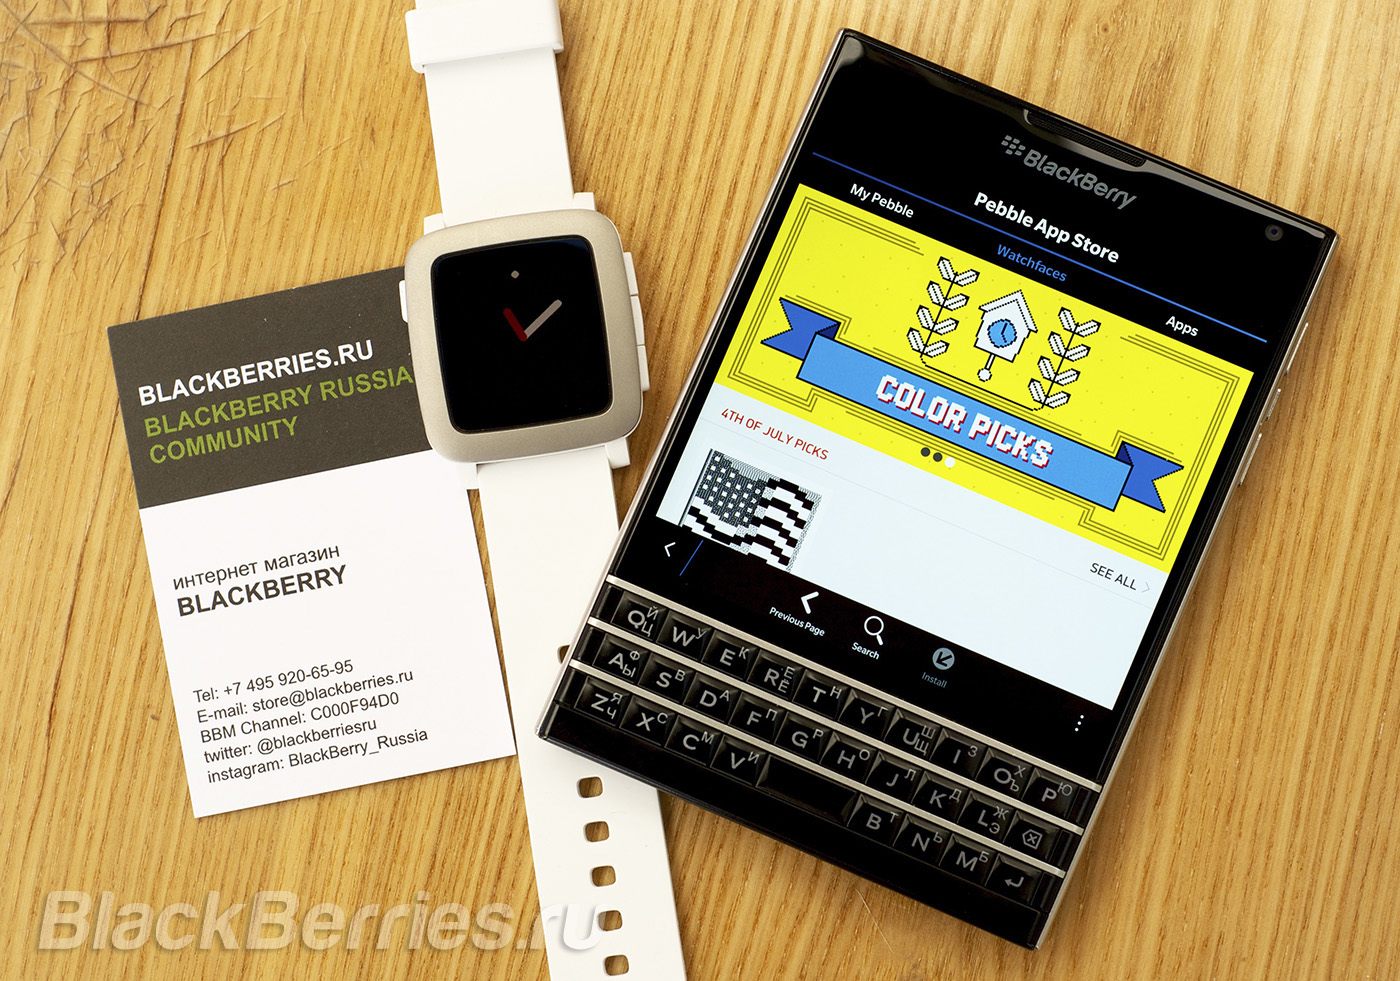 BlackBerry-Passport-Pebble-Time-12